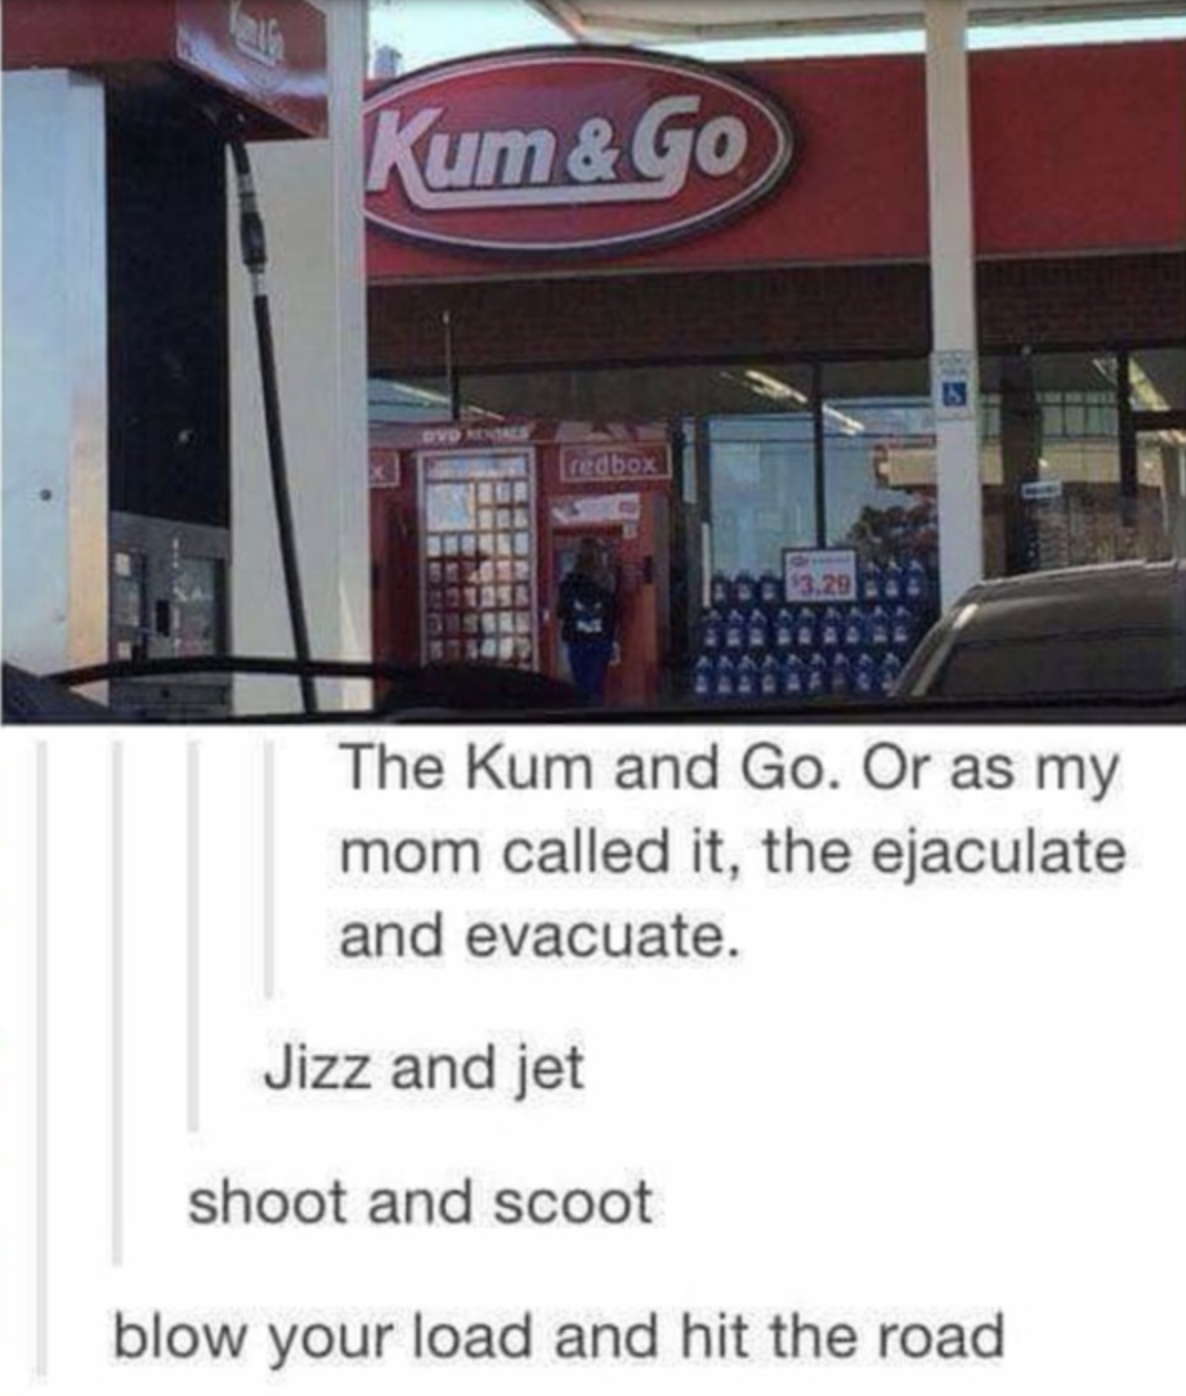 gas station named kum and go